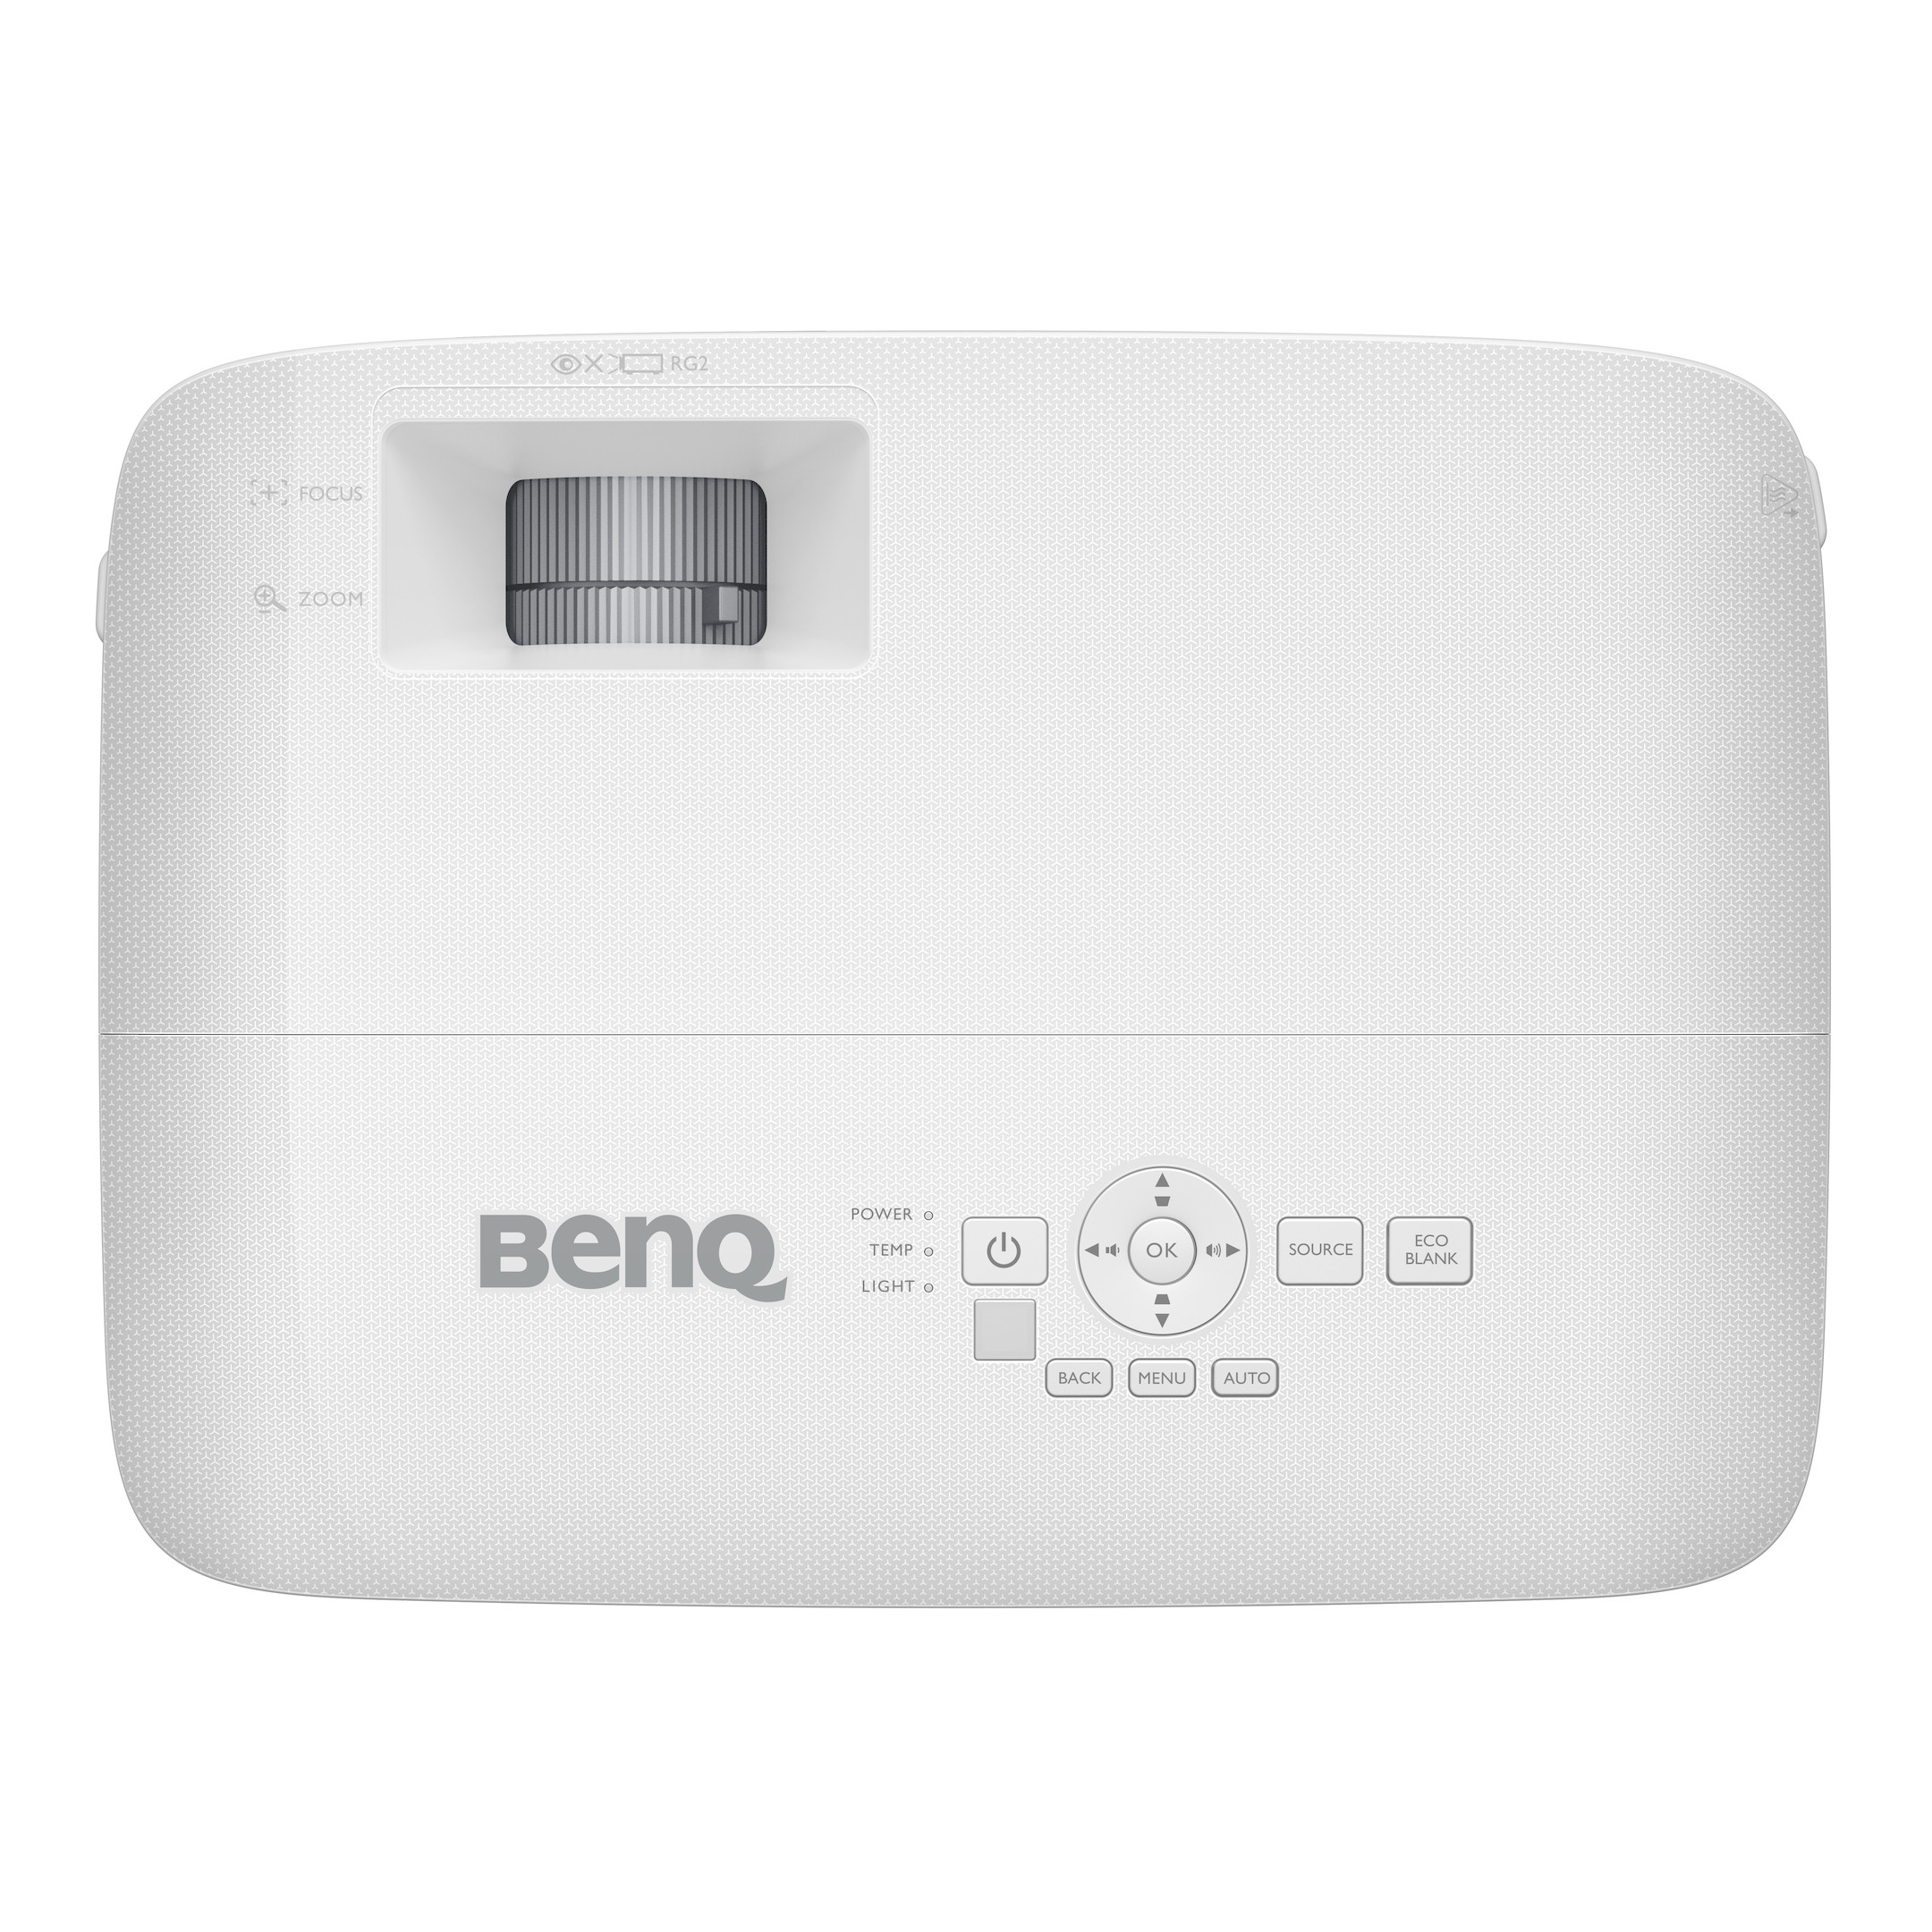 BenQ-MH560-Demoware-Platin